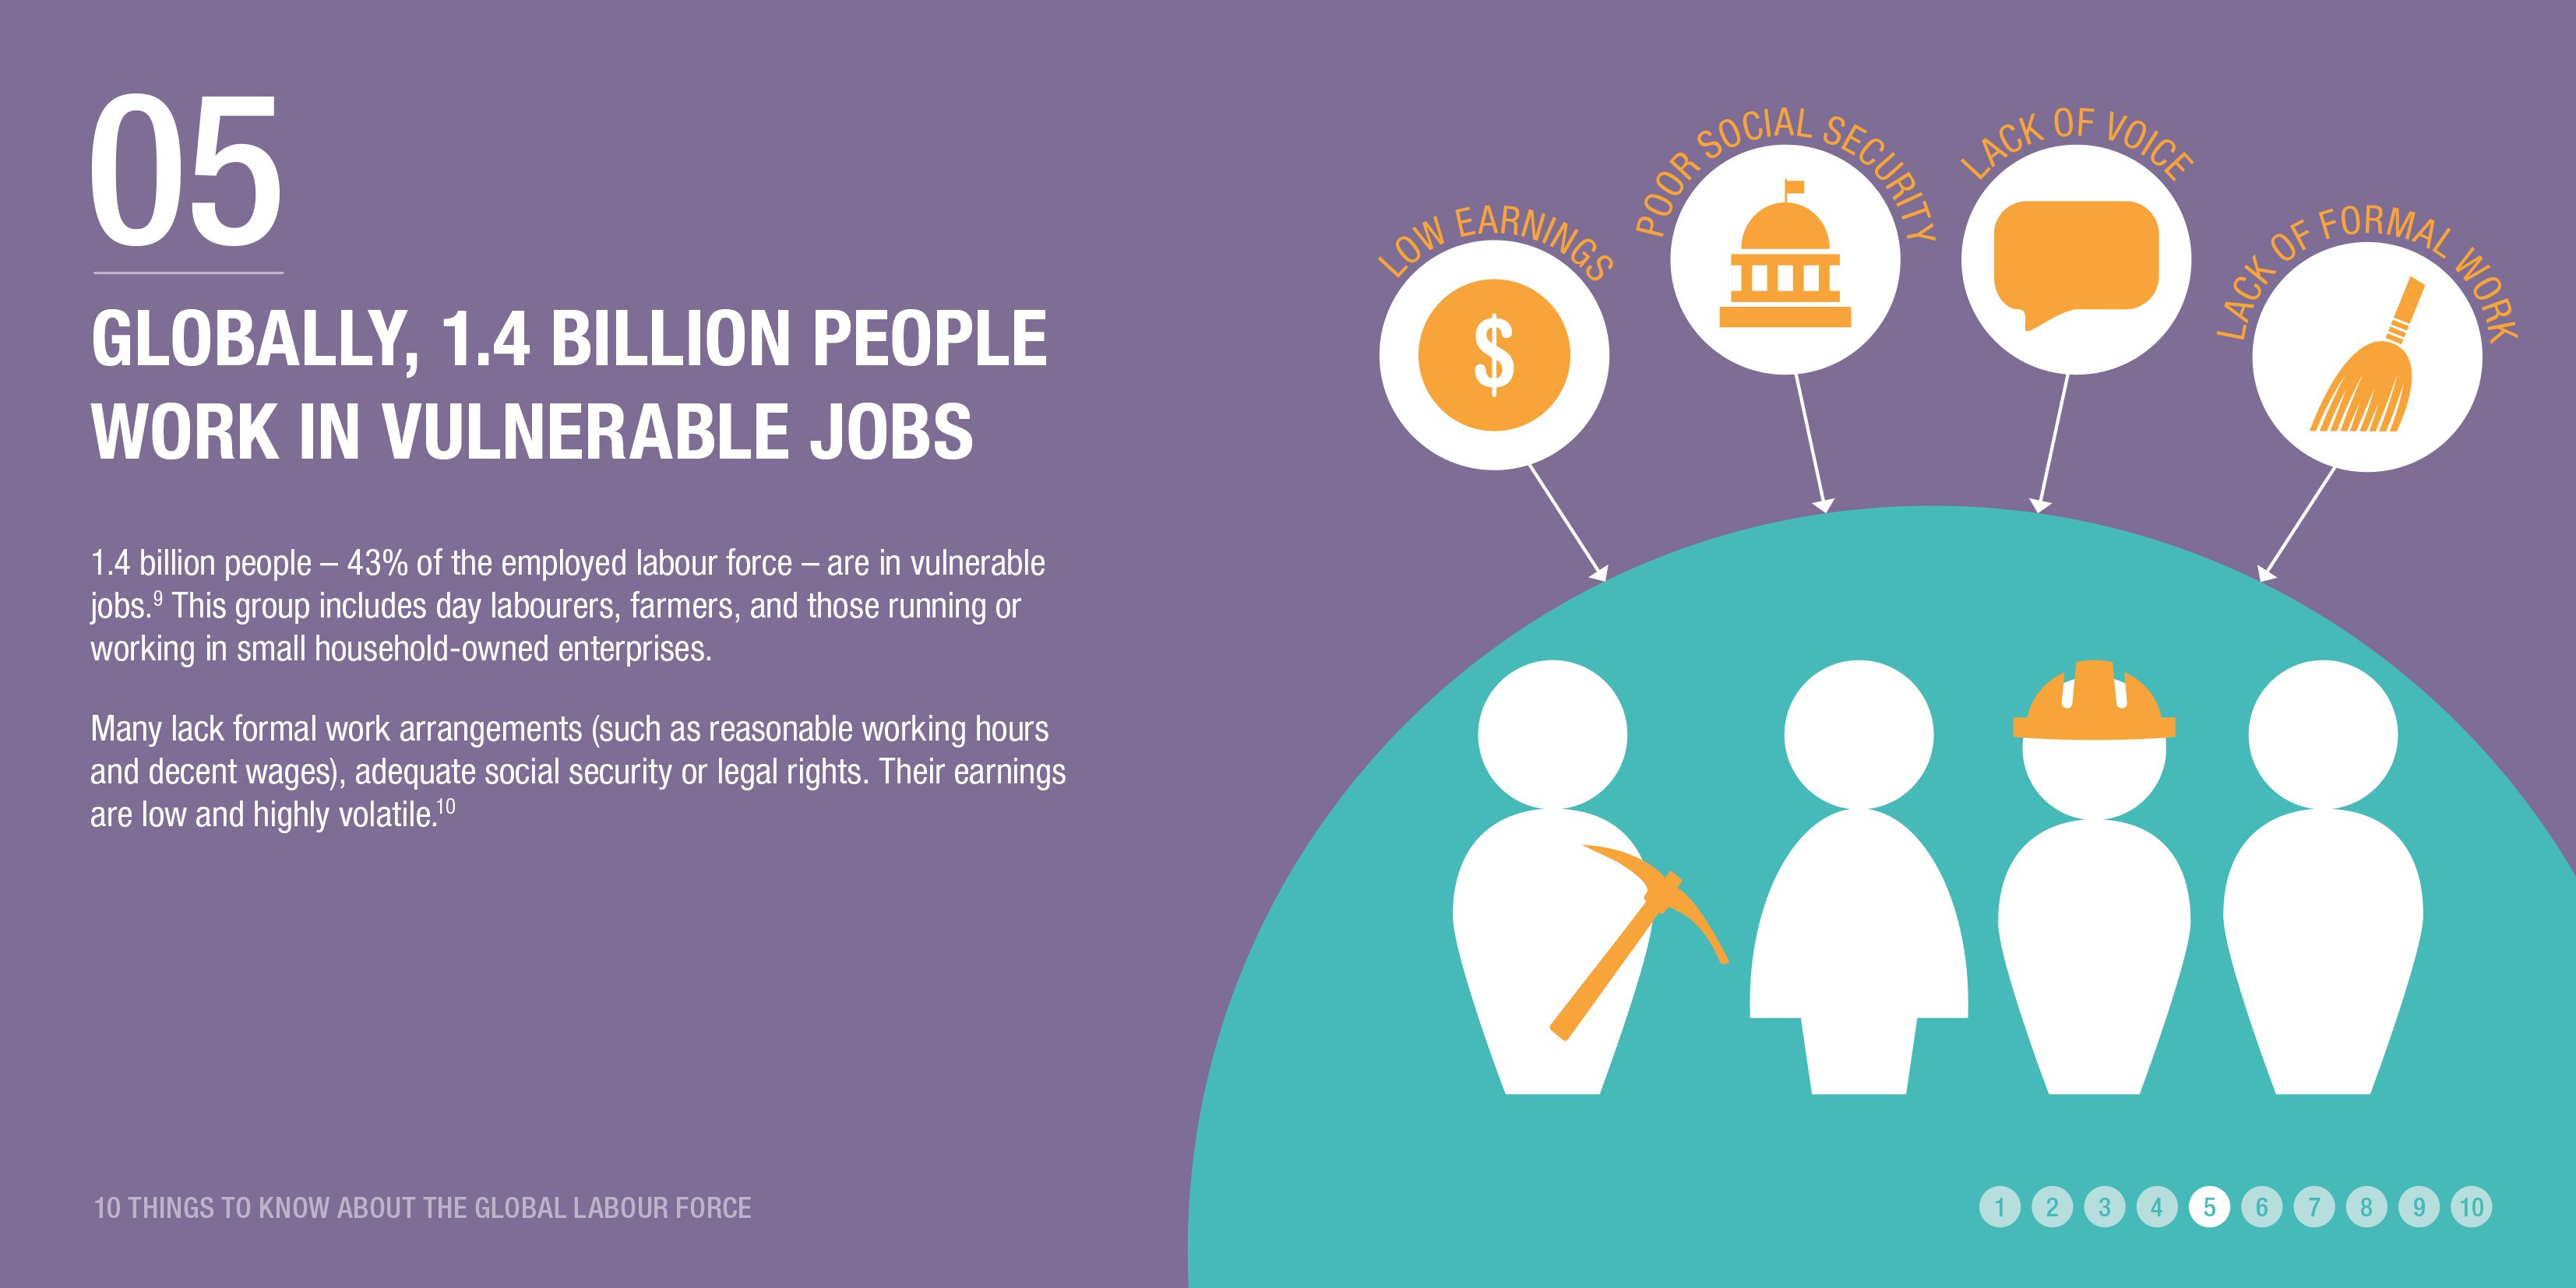 Globally, 1.4 billion people work in vulnerable jobs